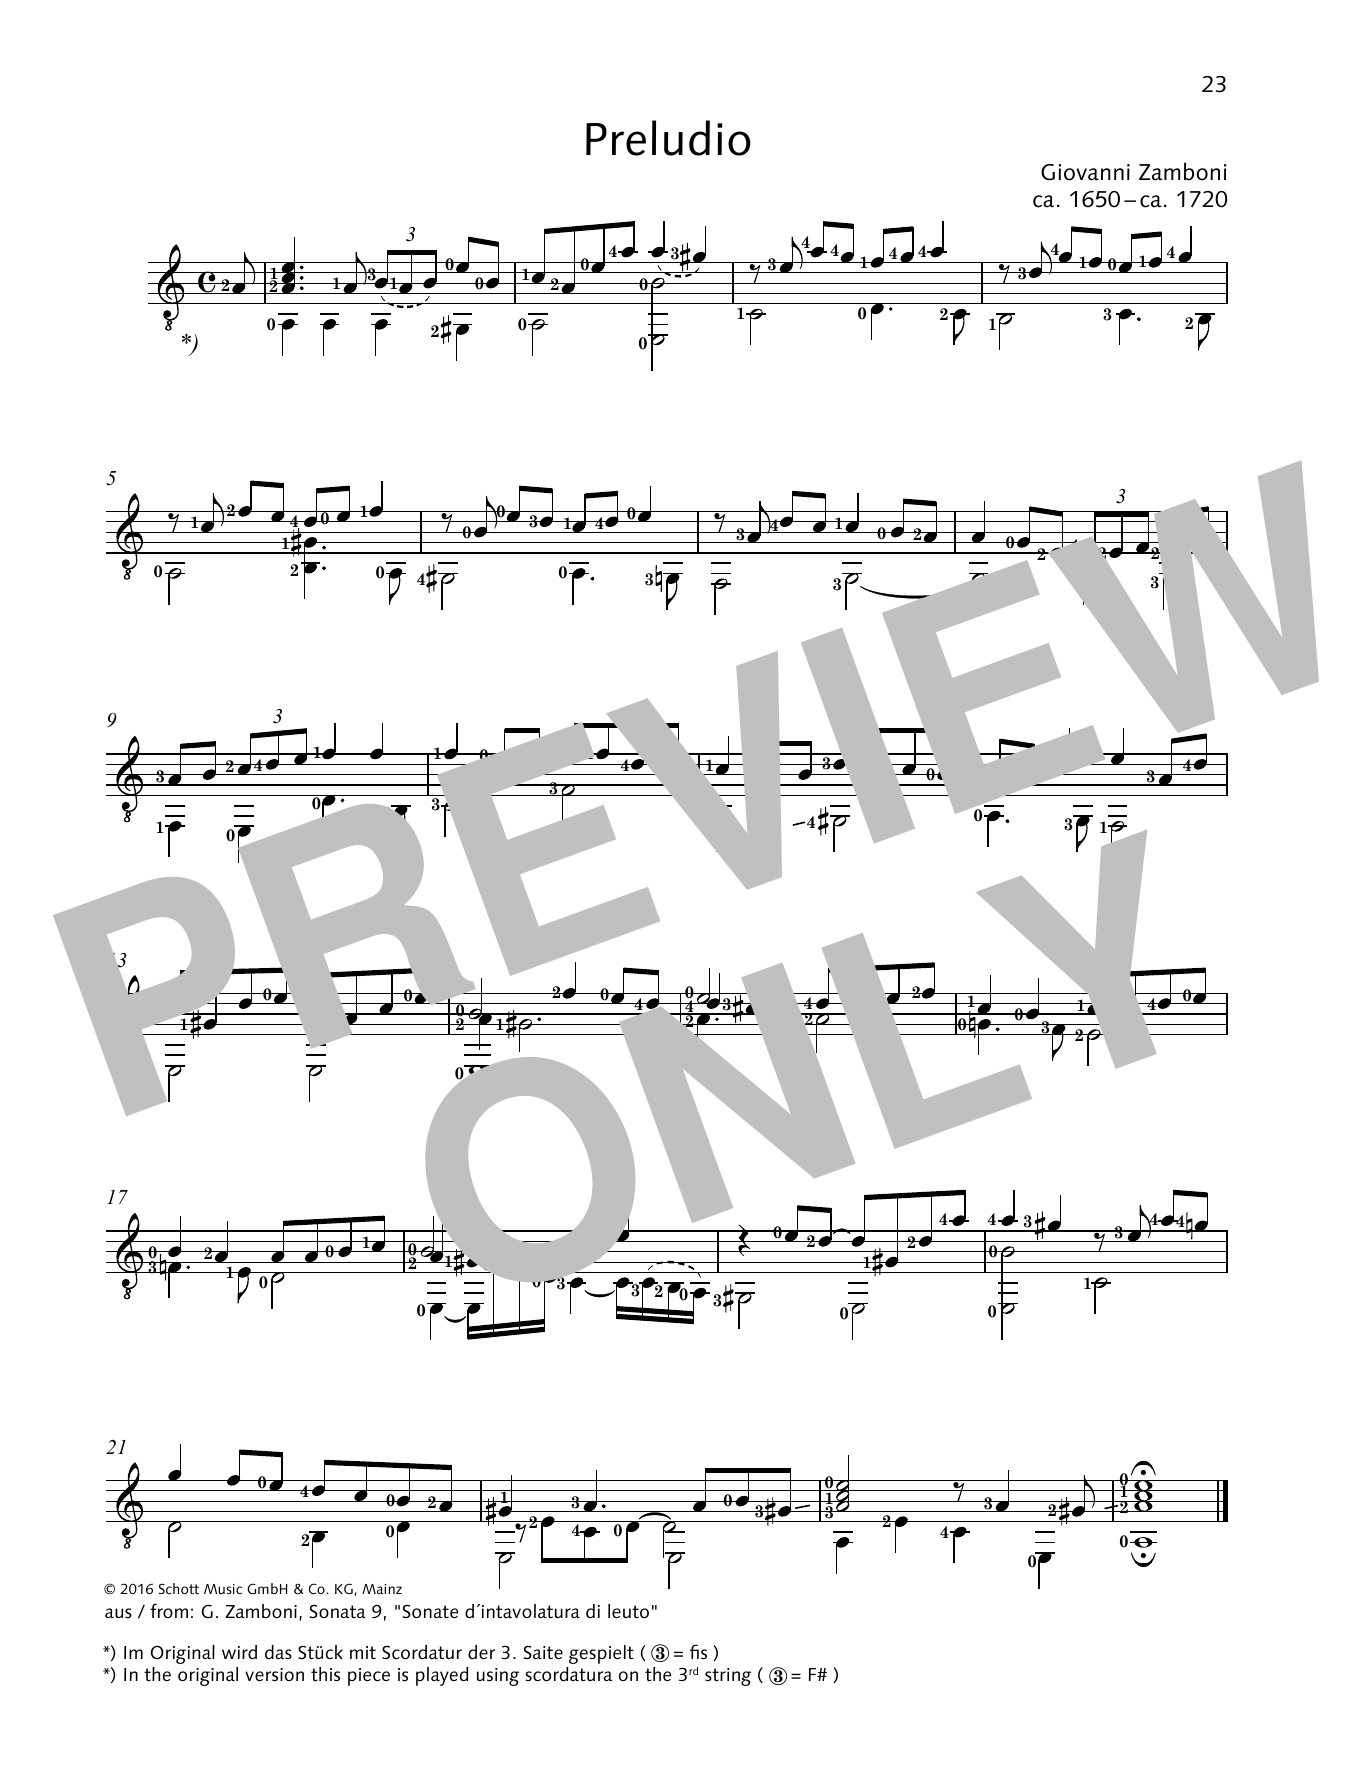 Giovanni Zamboni Preludio Sheet Music Notes & Chords for Solo Guitar - Download or Print PDF